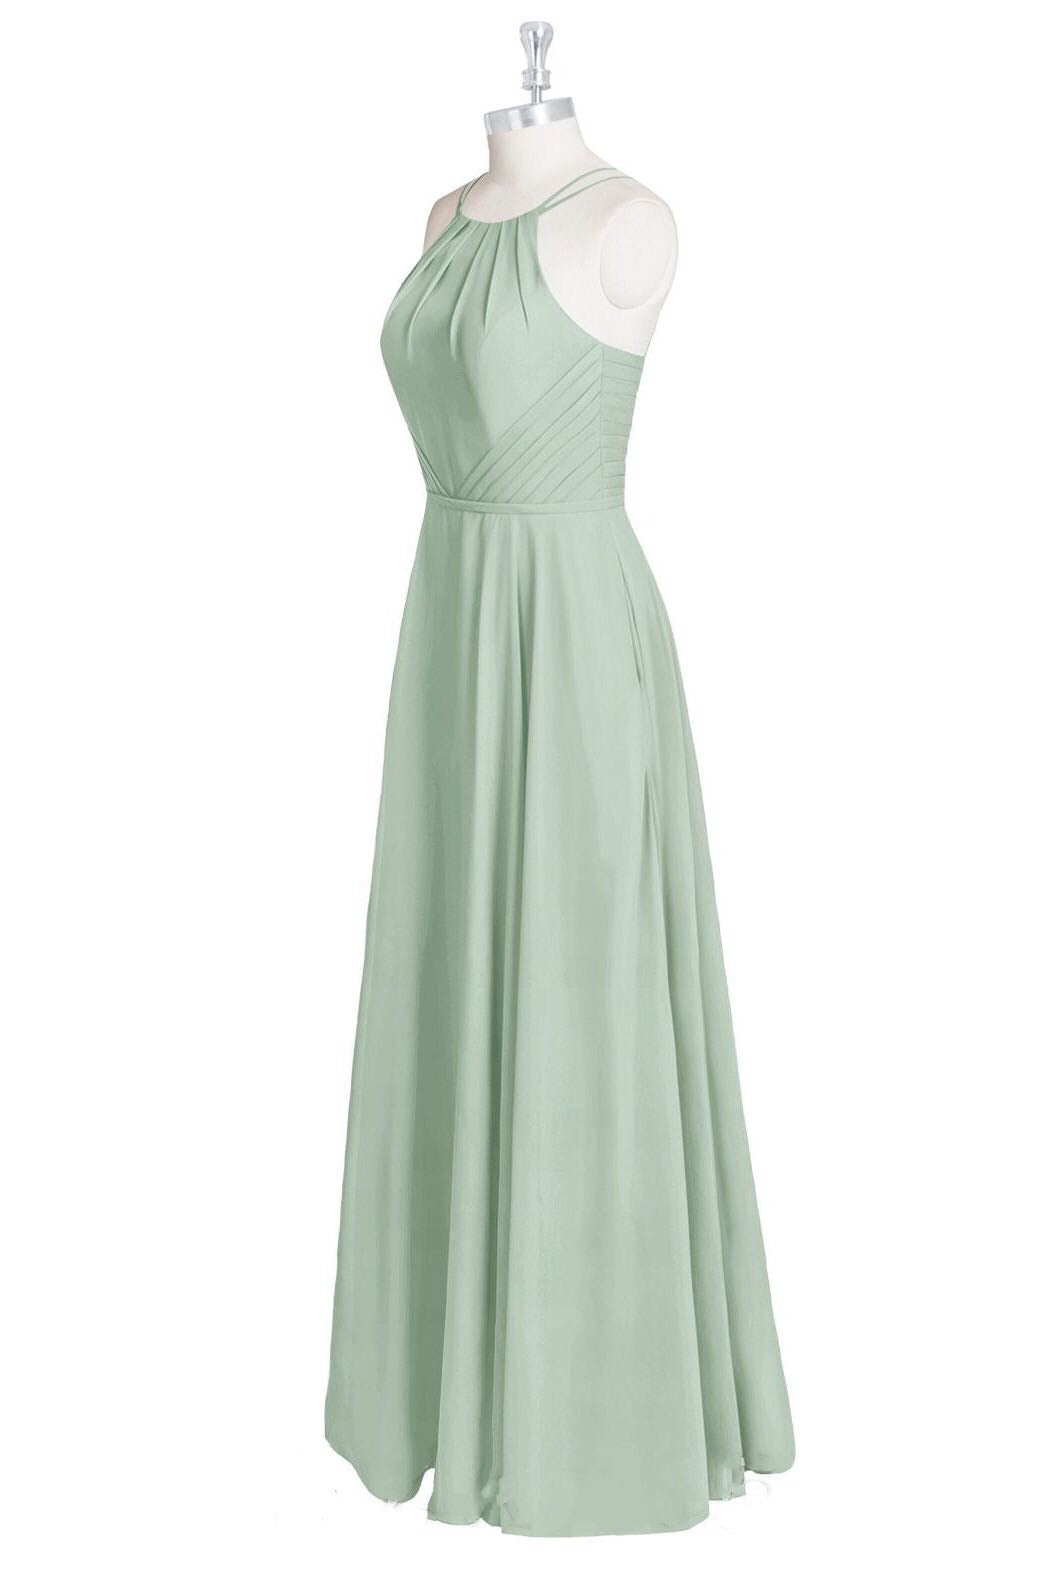 Sage Green Chiffon Halter A-Line Long Bridesmaid Dress